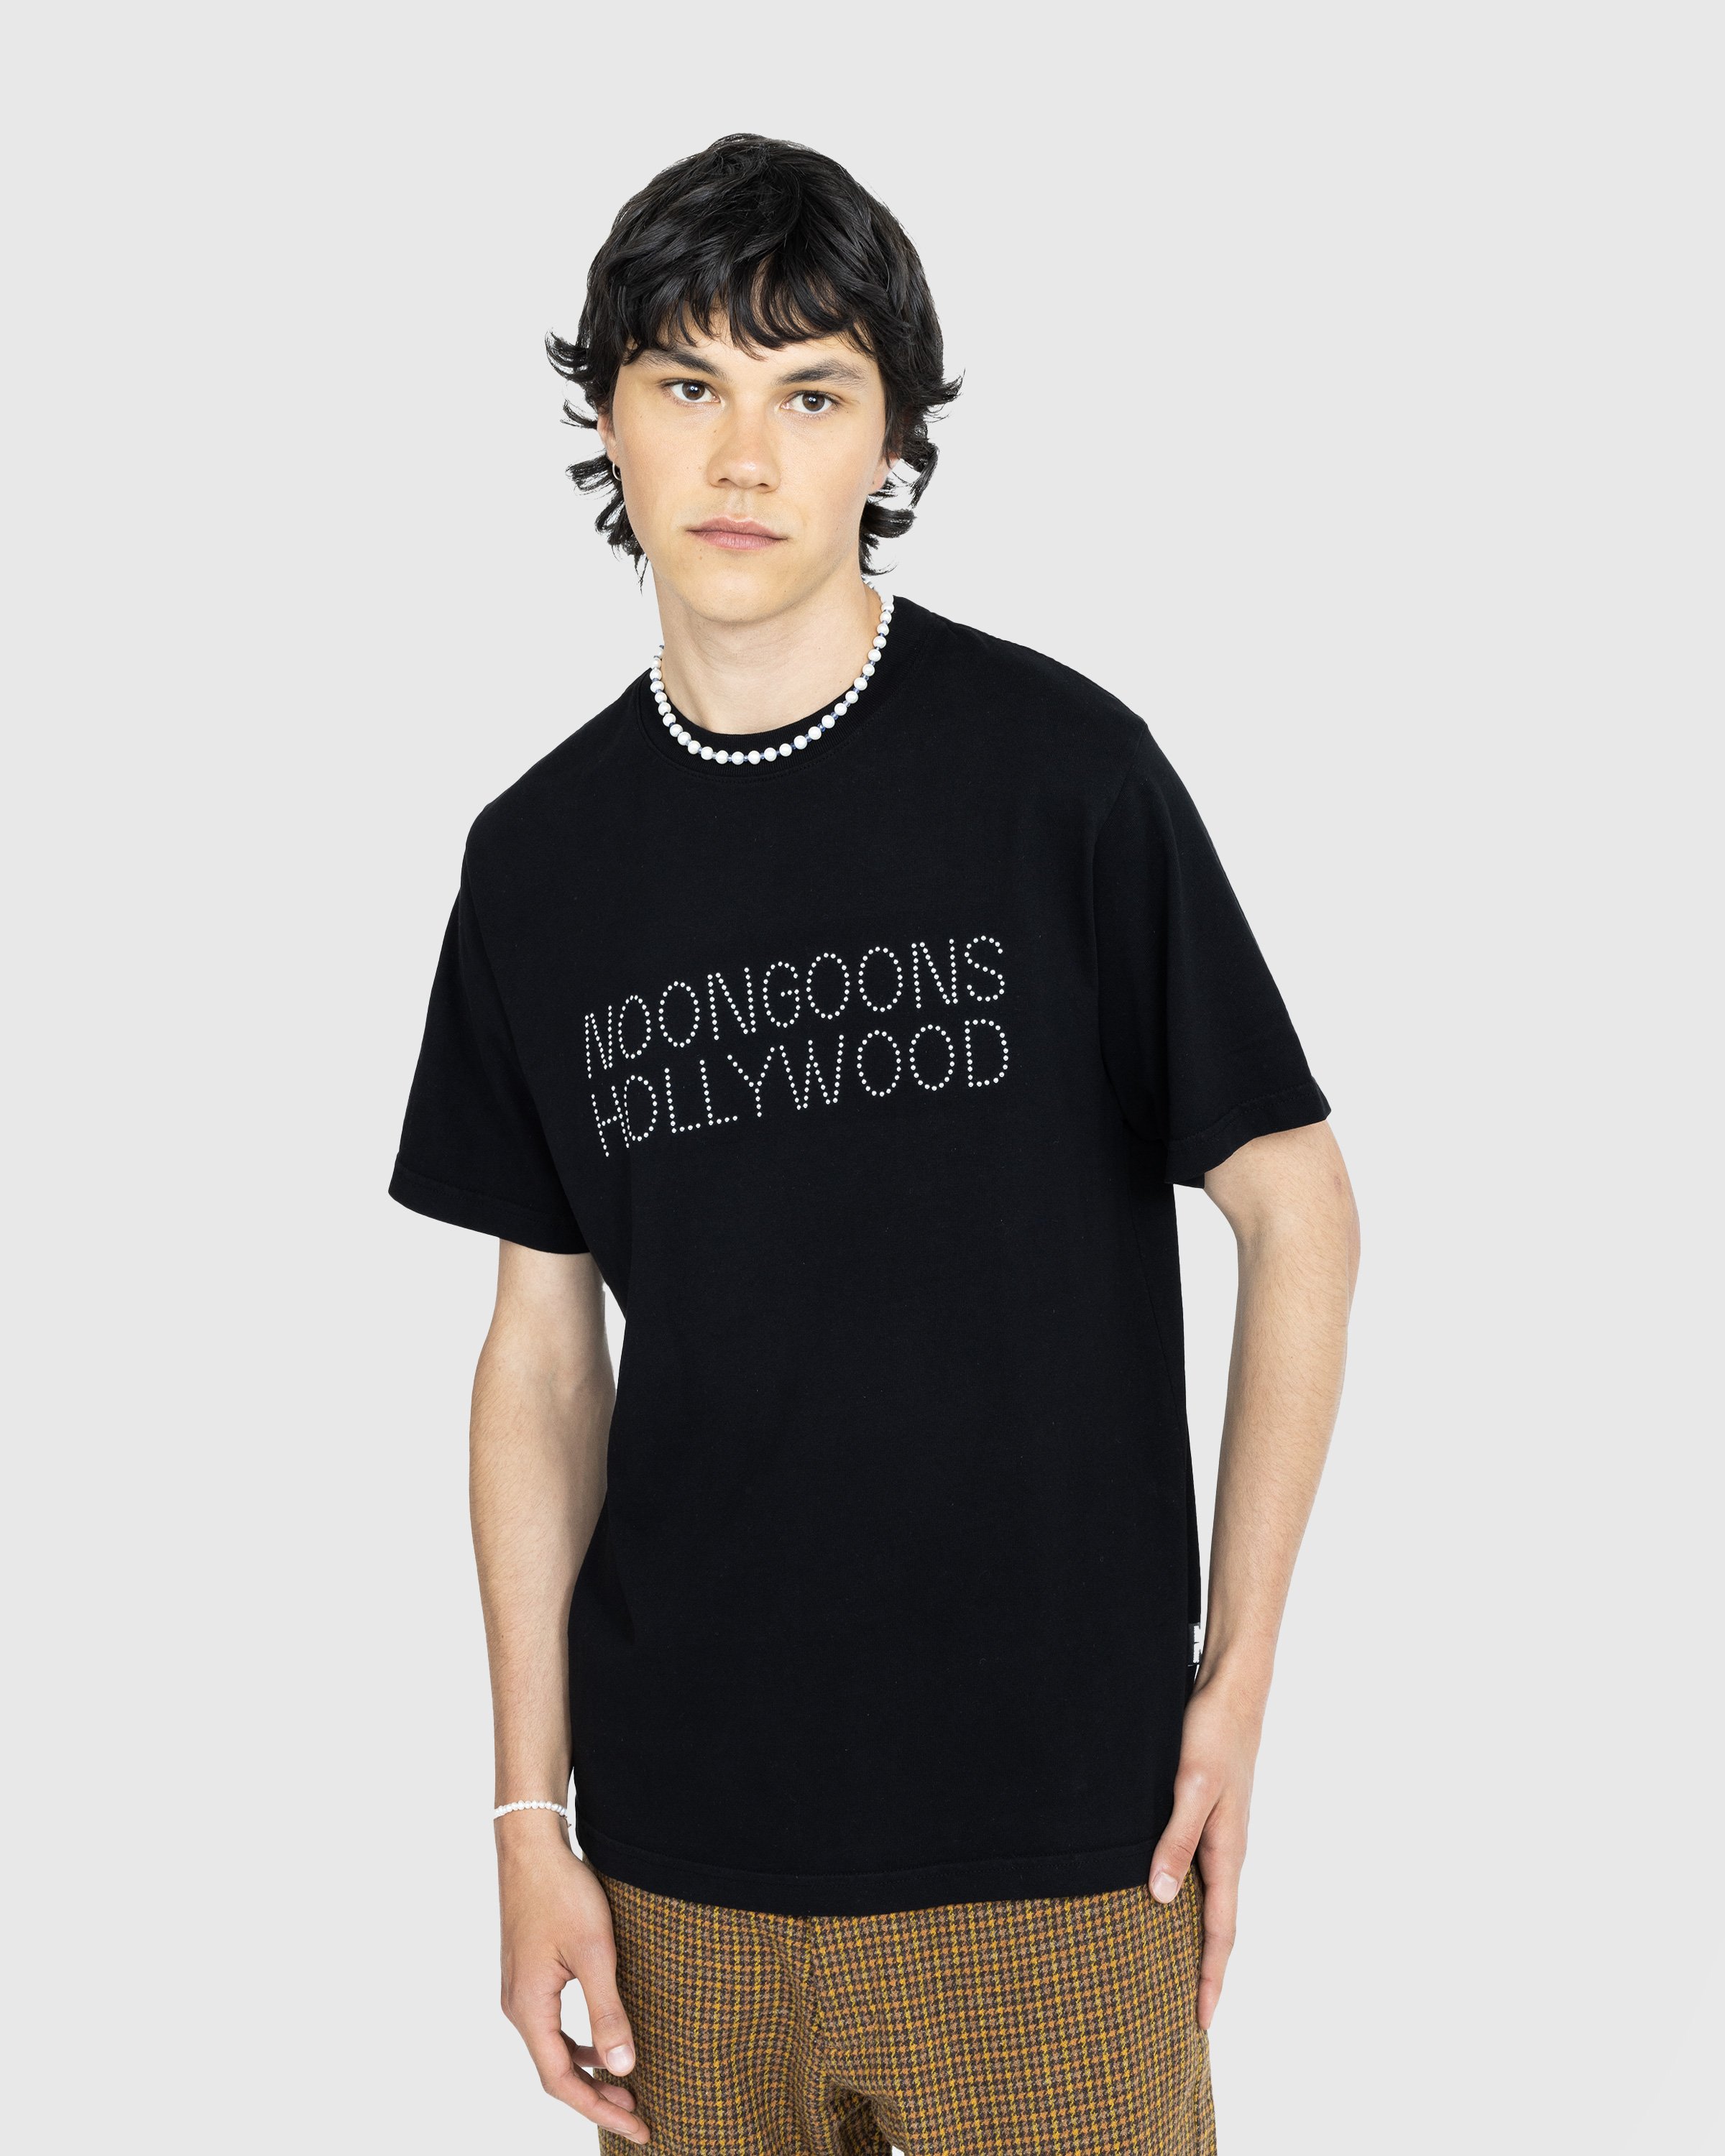 Noon Goons - Hollyweird T-Shirt Black - Clothing - Black - Image 2